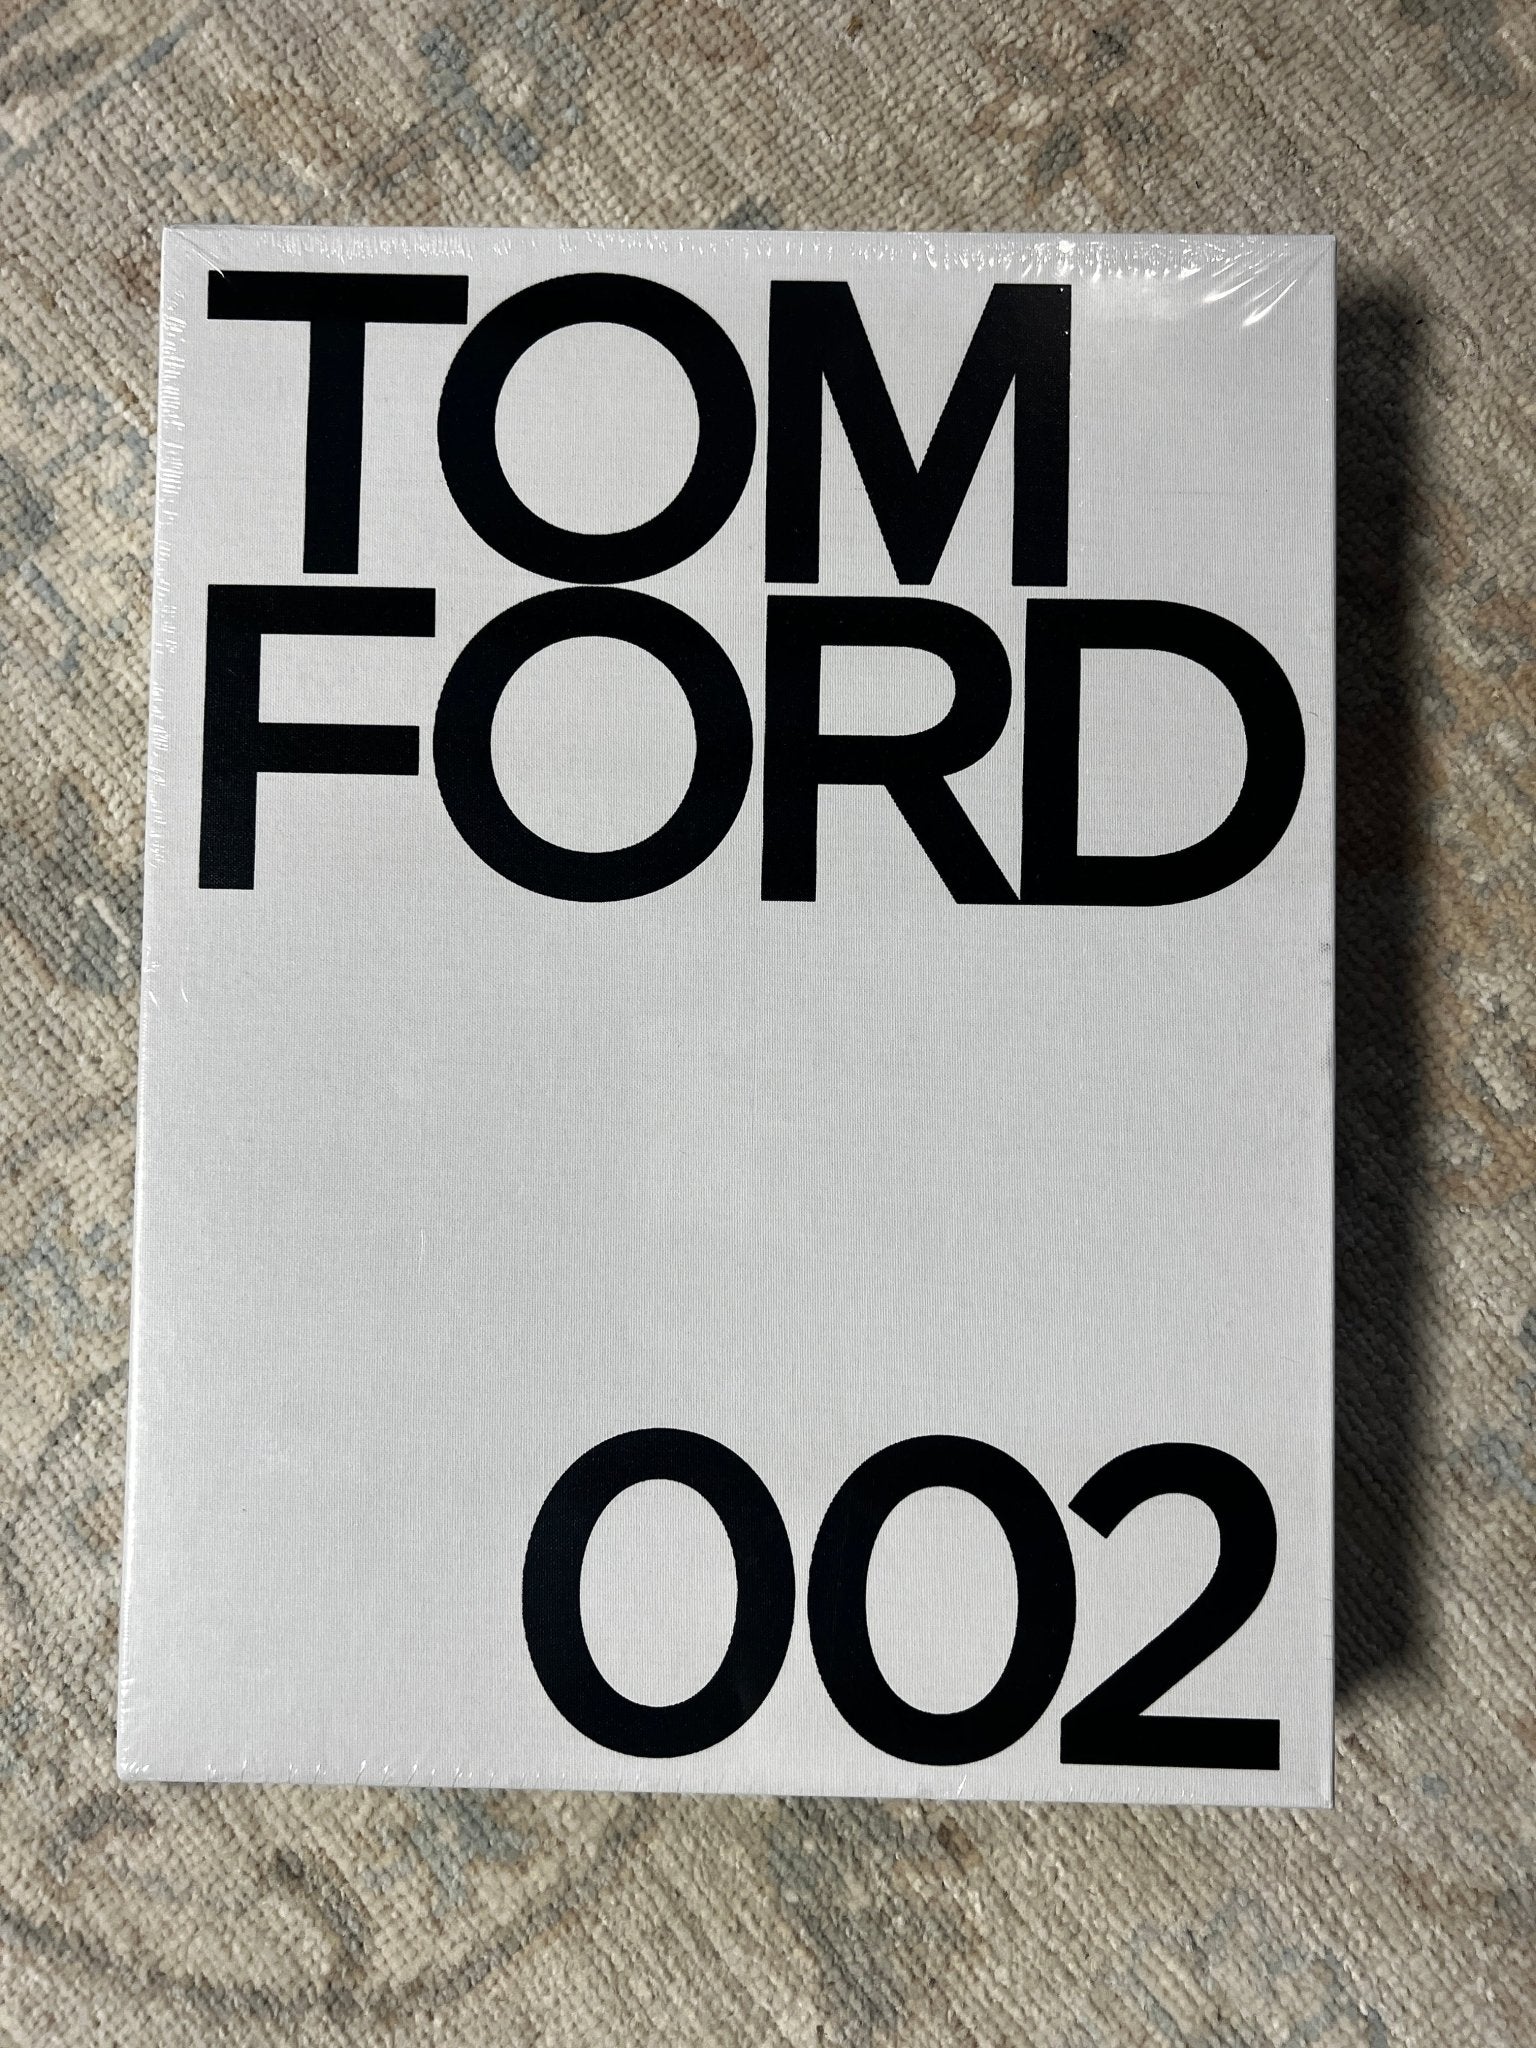 Tom Ford 002 Iconic Fashion Designer Coffee Table Book – Banana